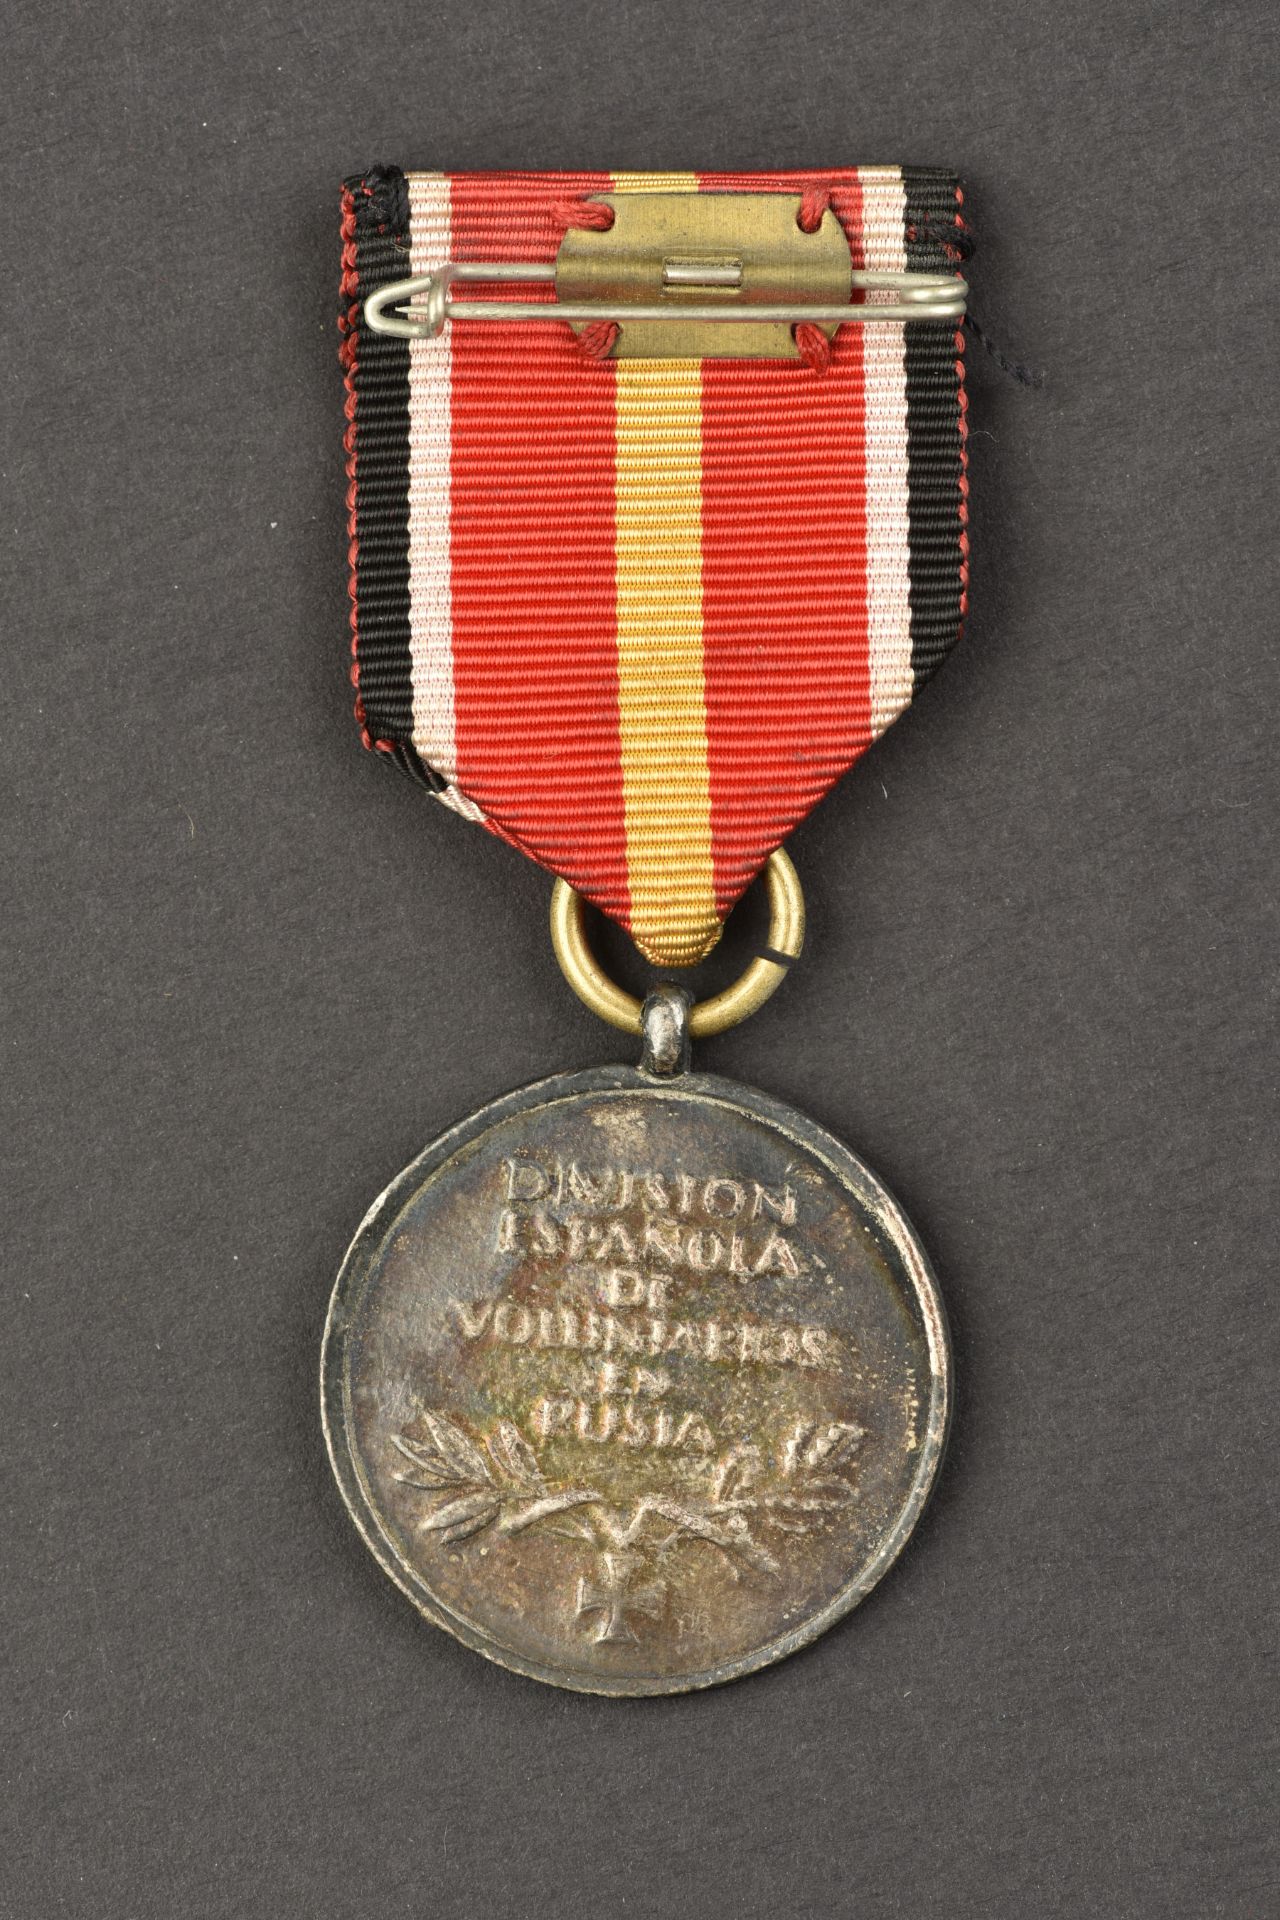 Medaille des volontaires espagnoles. Spanish Volunteer Medal. - Bild 2 aus 2